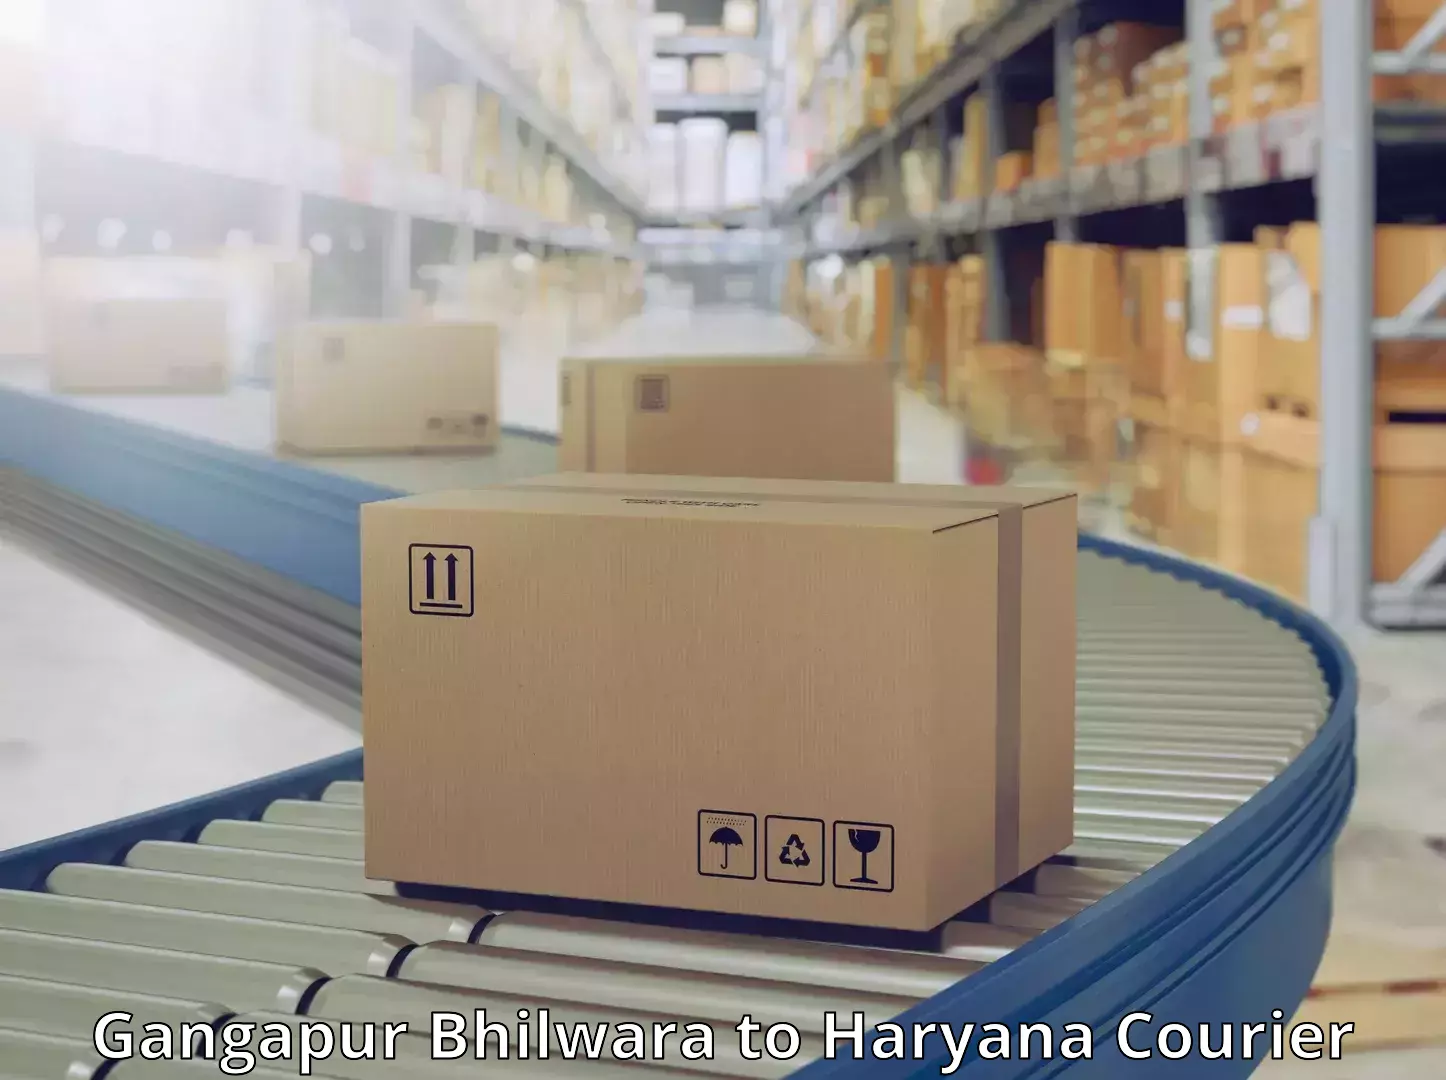 Express logistics providers Gangapur Bhilwara to Bilaspur Haryana